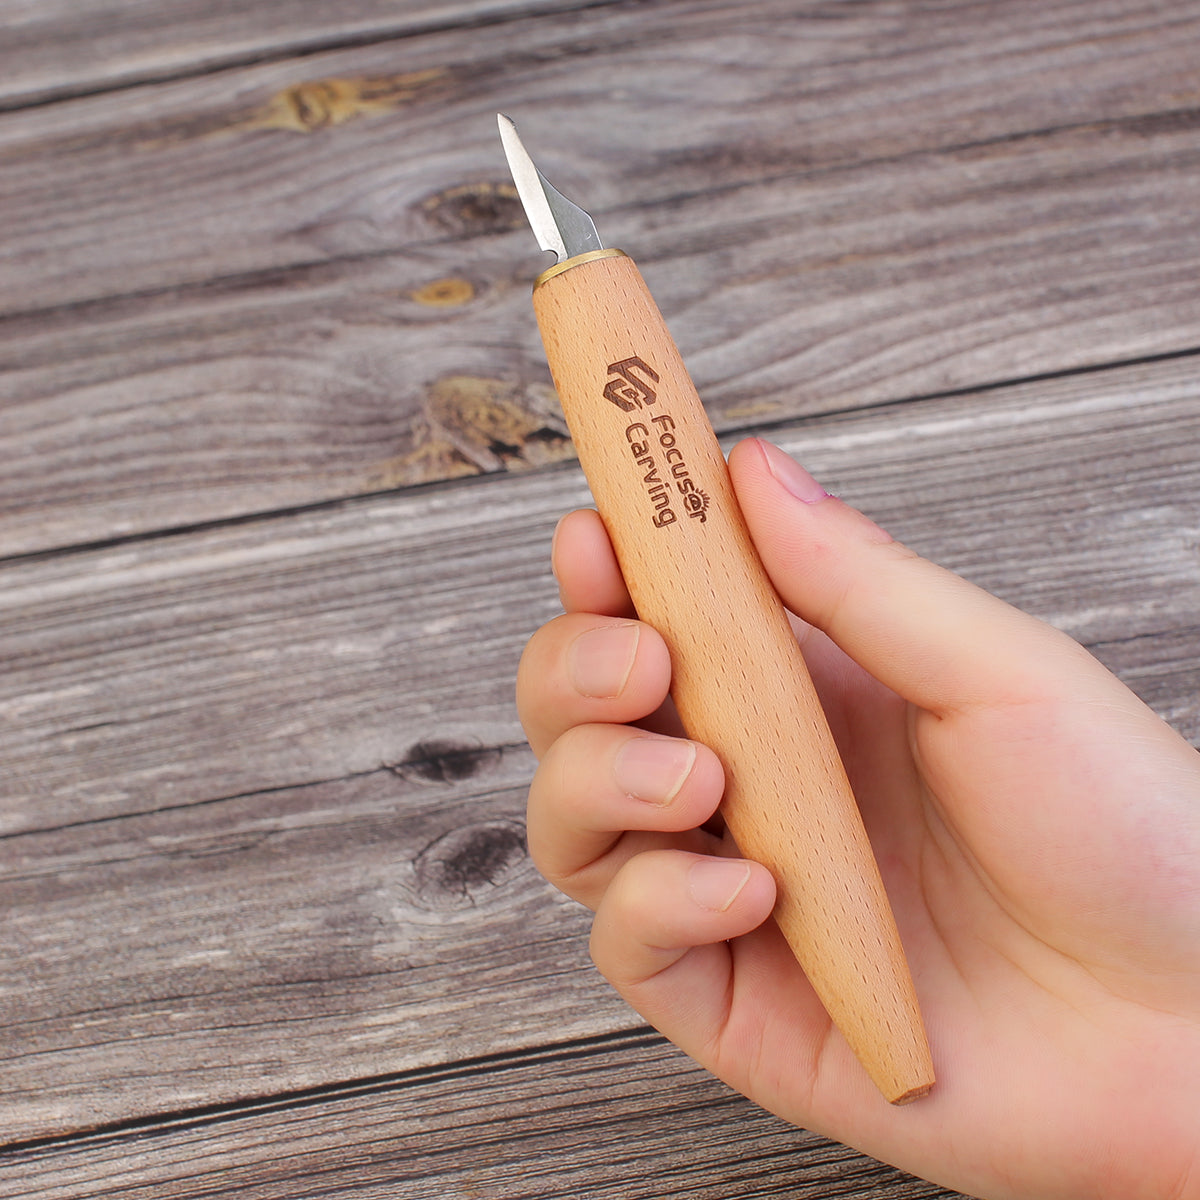 Best Wood Carving Detail Knife